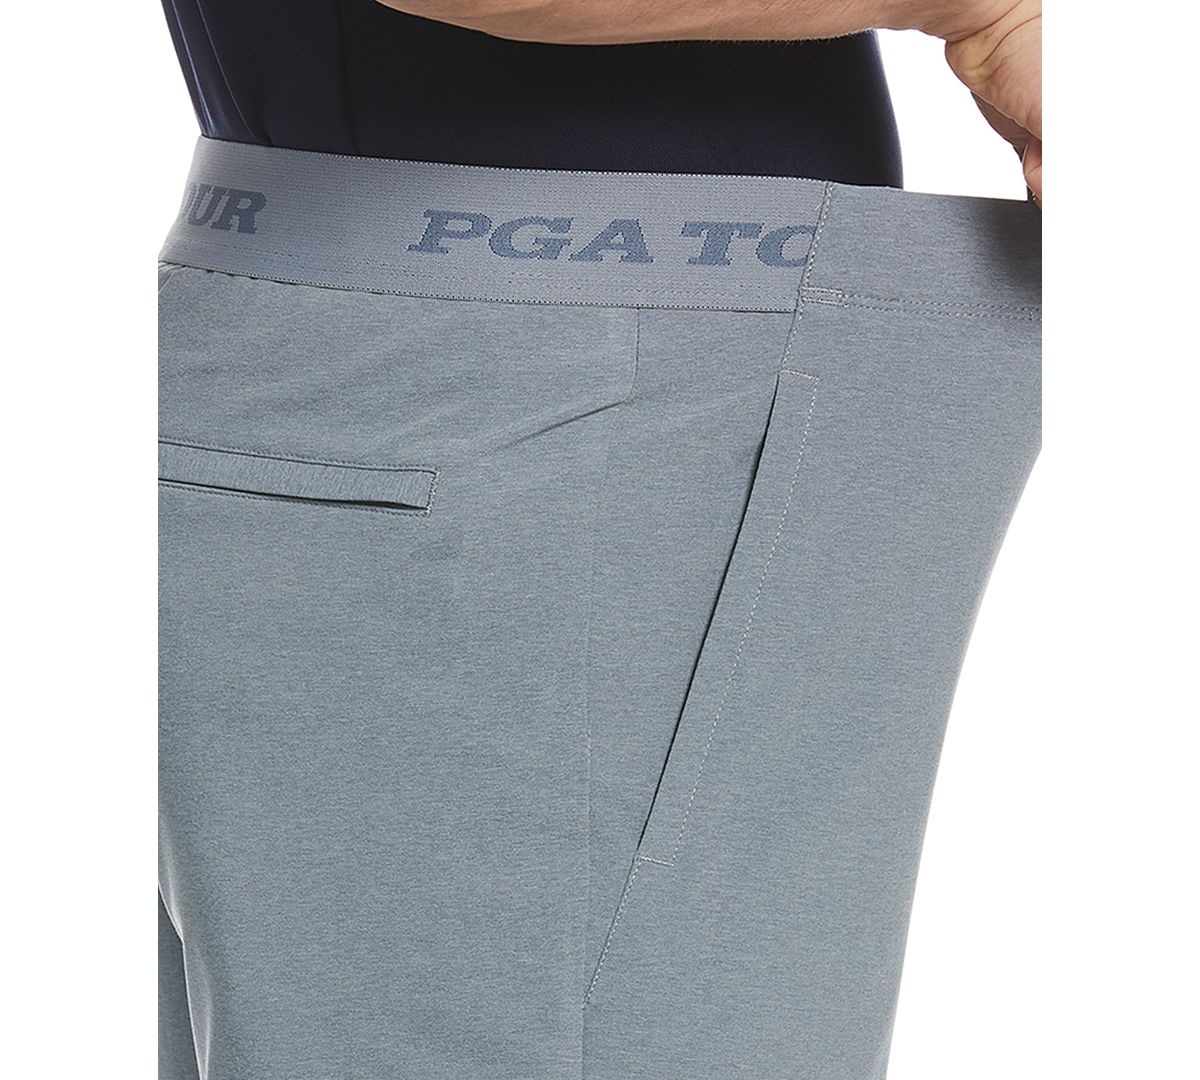 Pga Tour Pull-on Golf Shorts Tradewinds